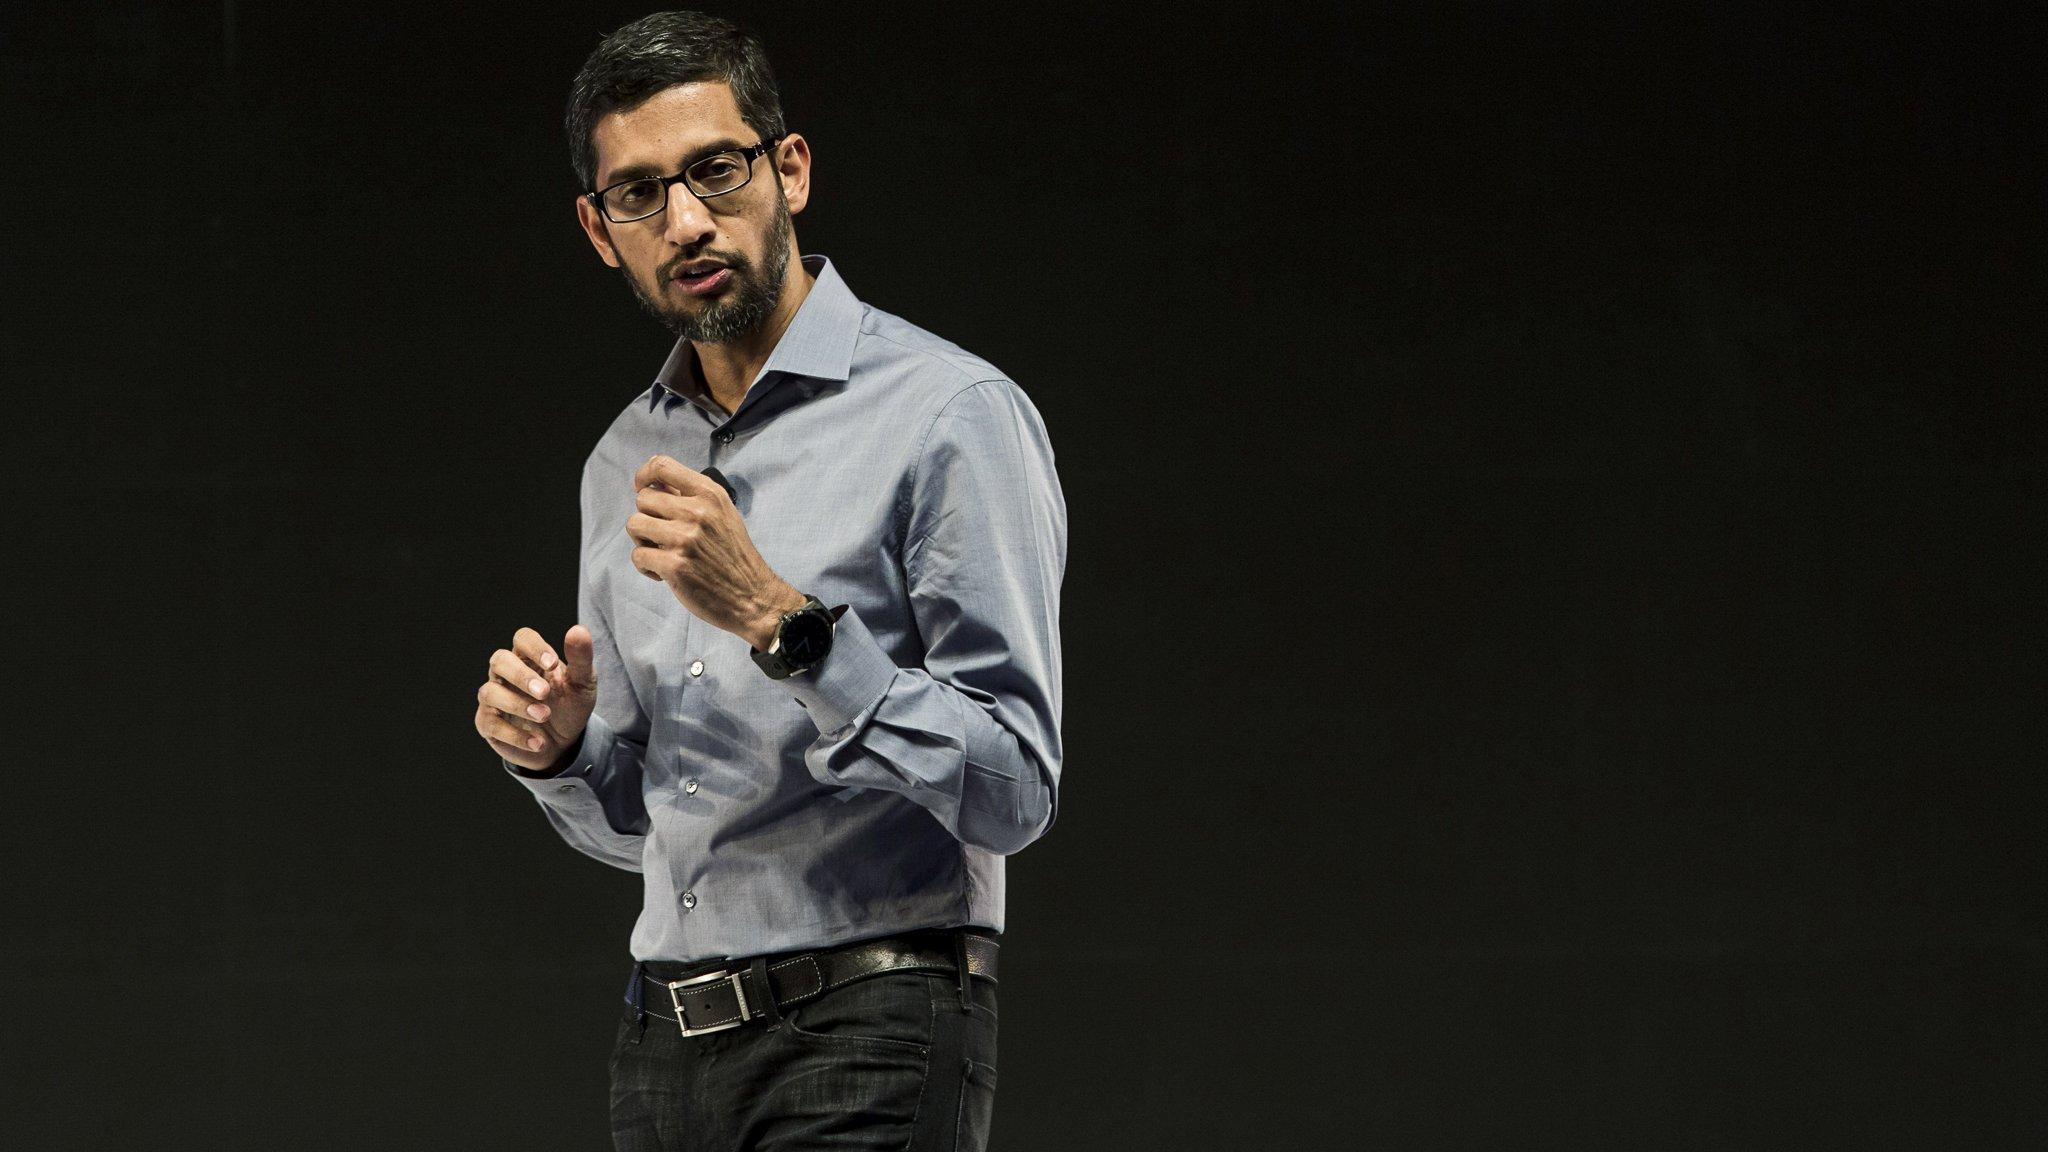 Google's Sundar Pichai receives $199m stock award